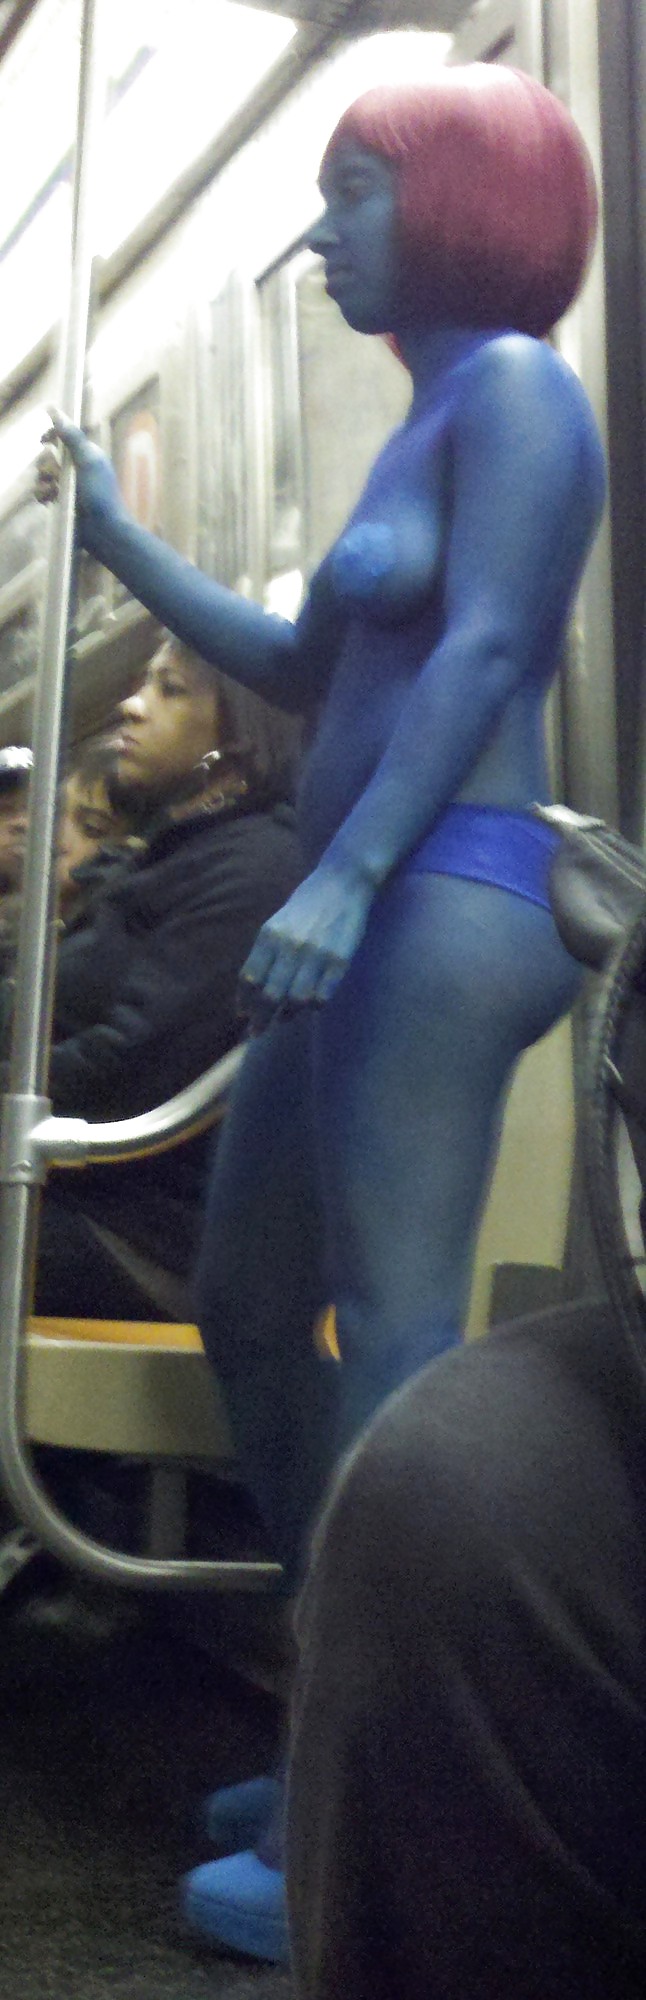 Free New York Subway Girls 113 Halloween Avatar Girl or Mystique photos